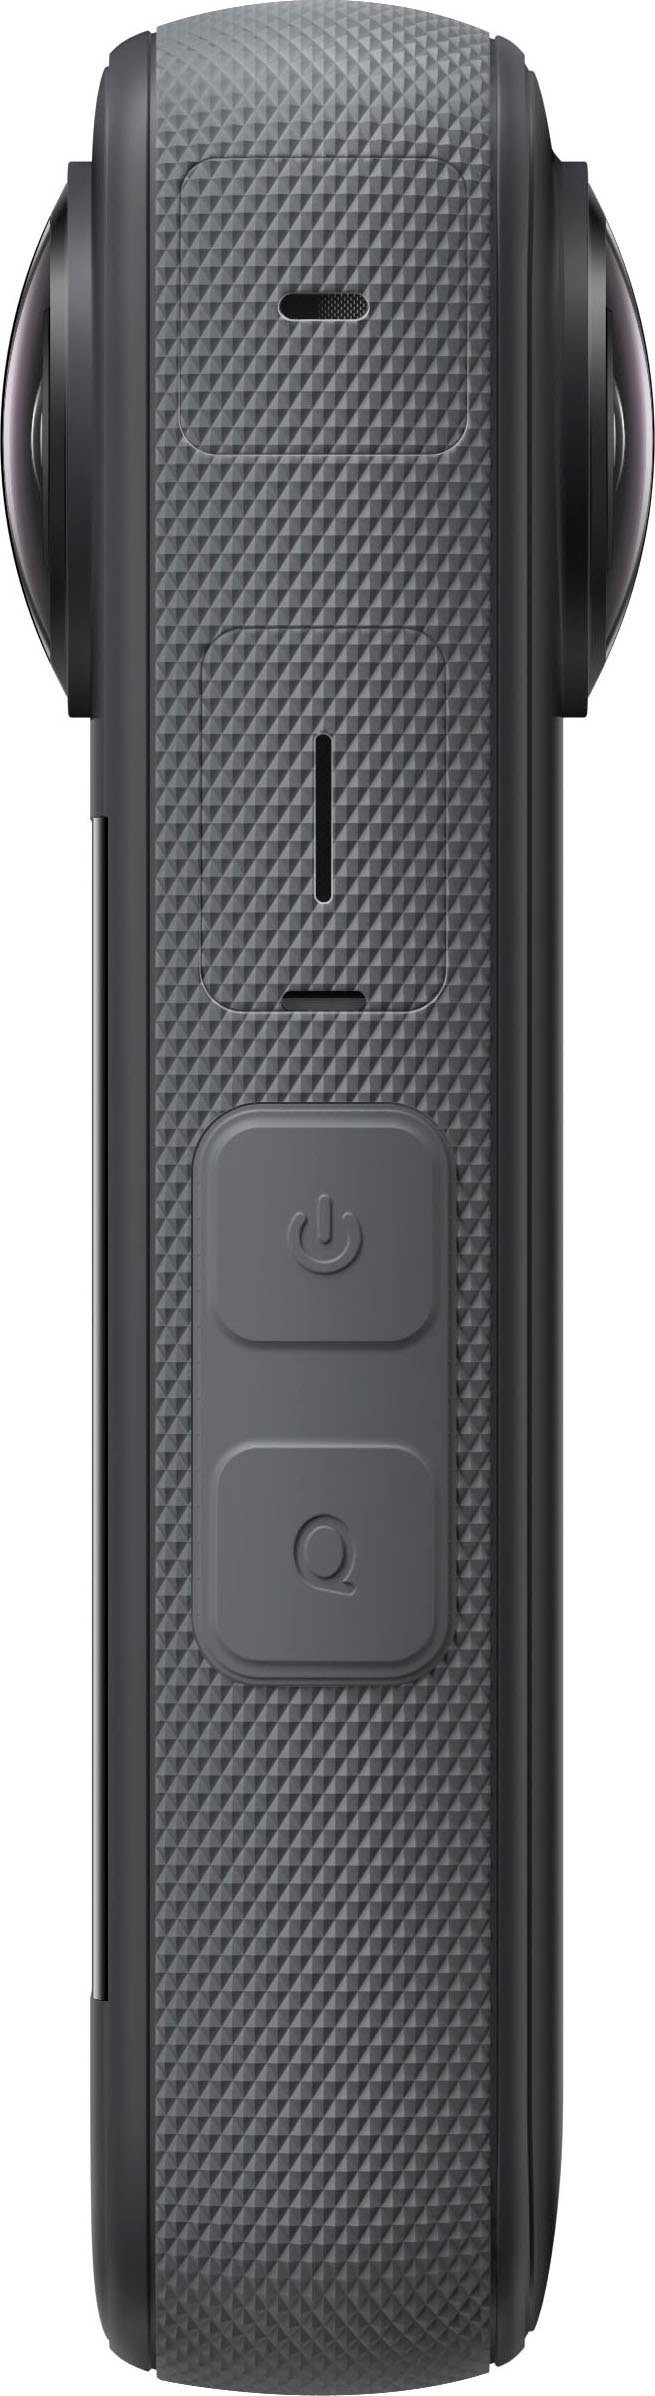 Insta360 Kit (5,7K, X3 WLAN (Wi-Fi) All-Purpose Camcorder Bluetooth,